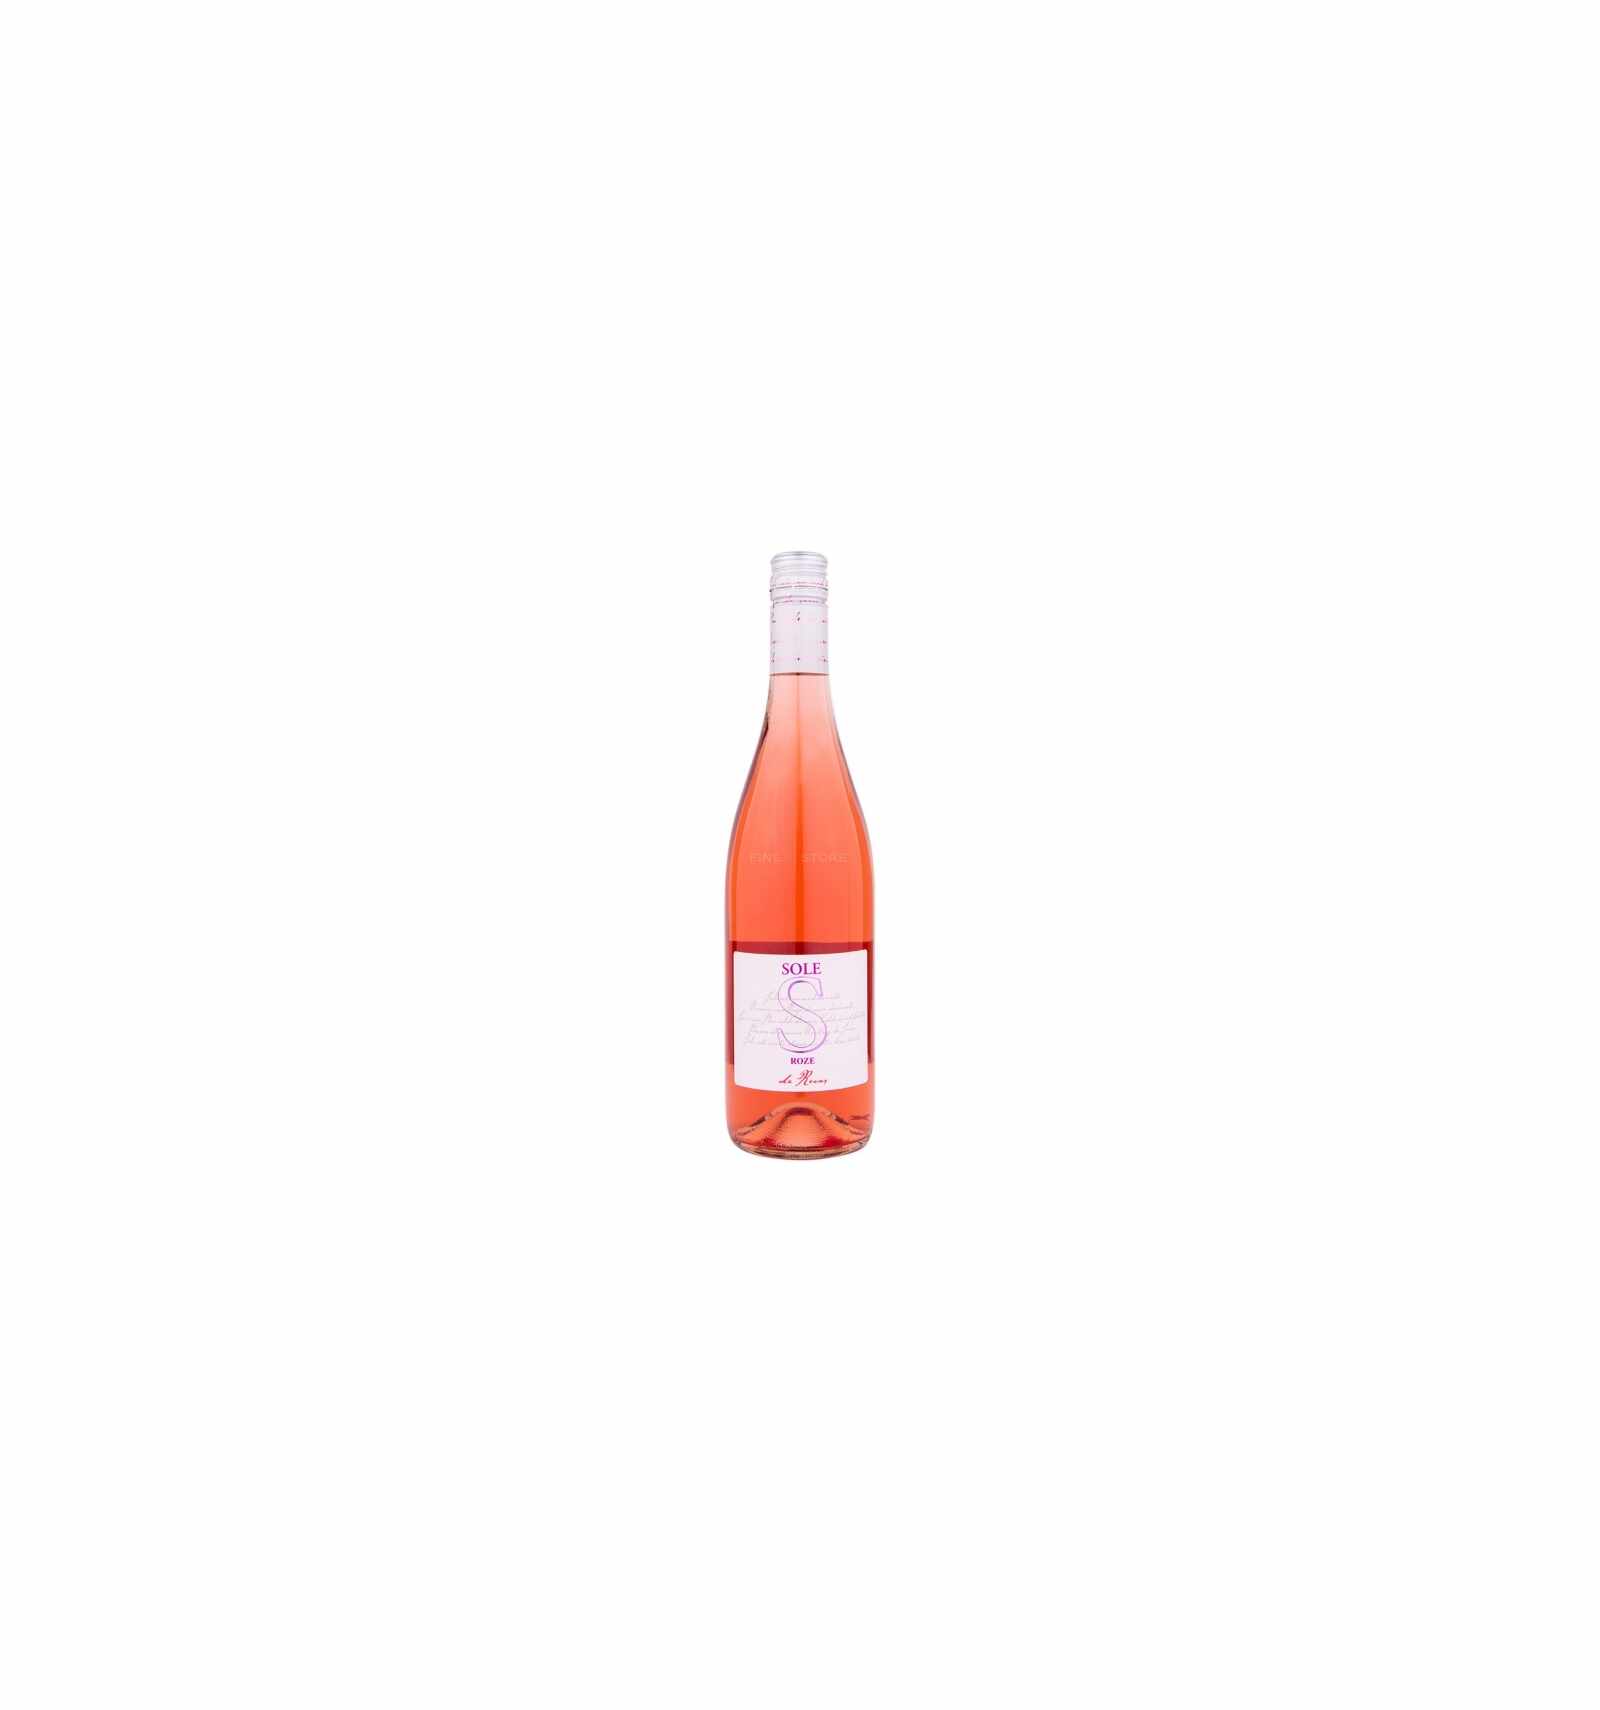 Vin roze sec, Sole Recas, 0.75L, 13.5% alc., Romania